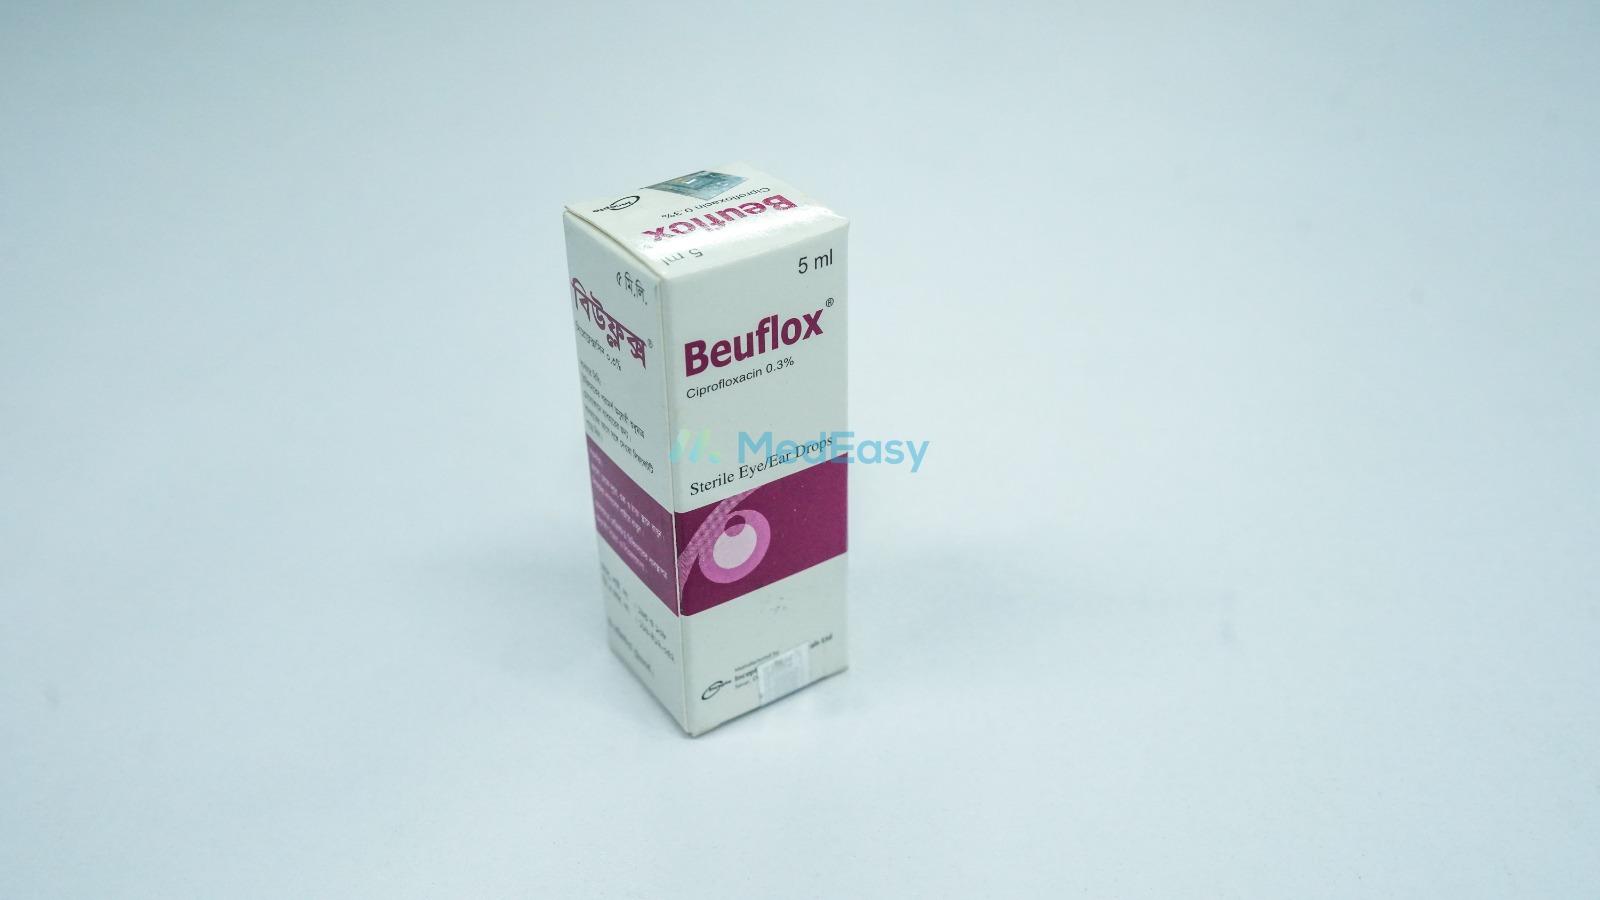 Beuflox